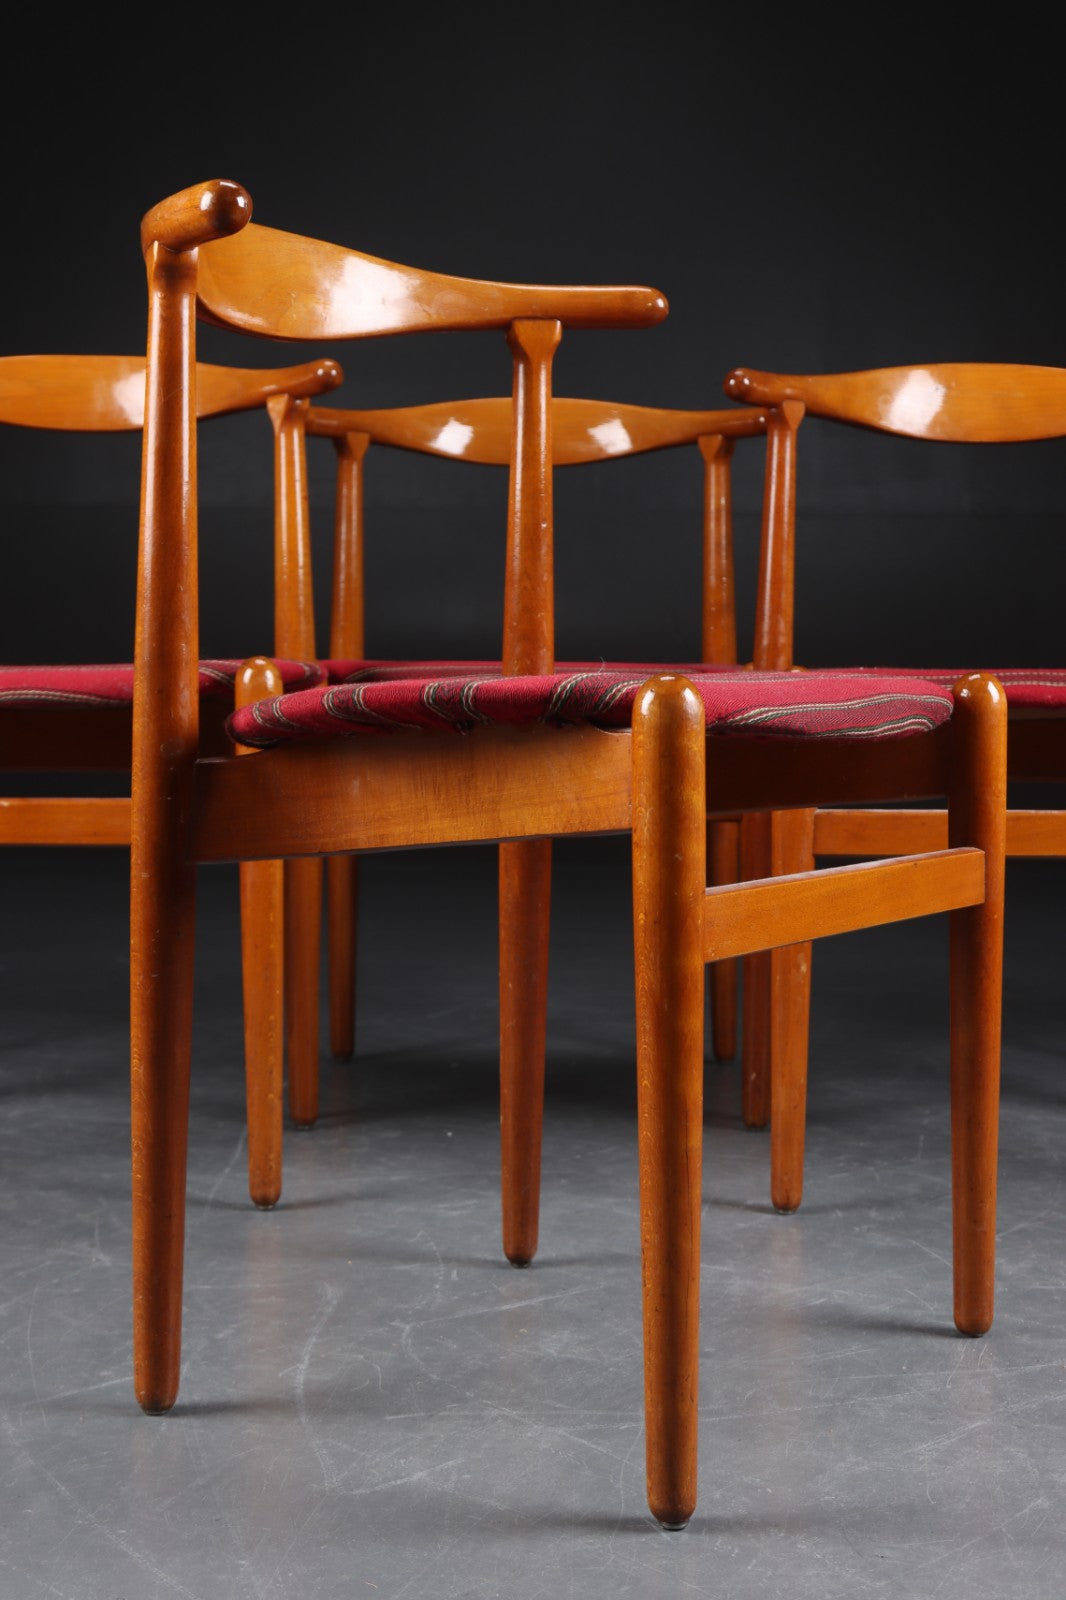 Hans J. Wegner for Fritz Hansen. Set of six dining chairs, model 708. To be restored.